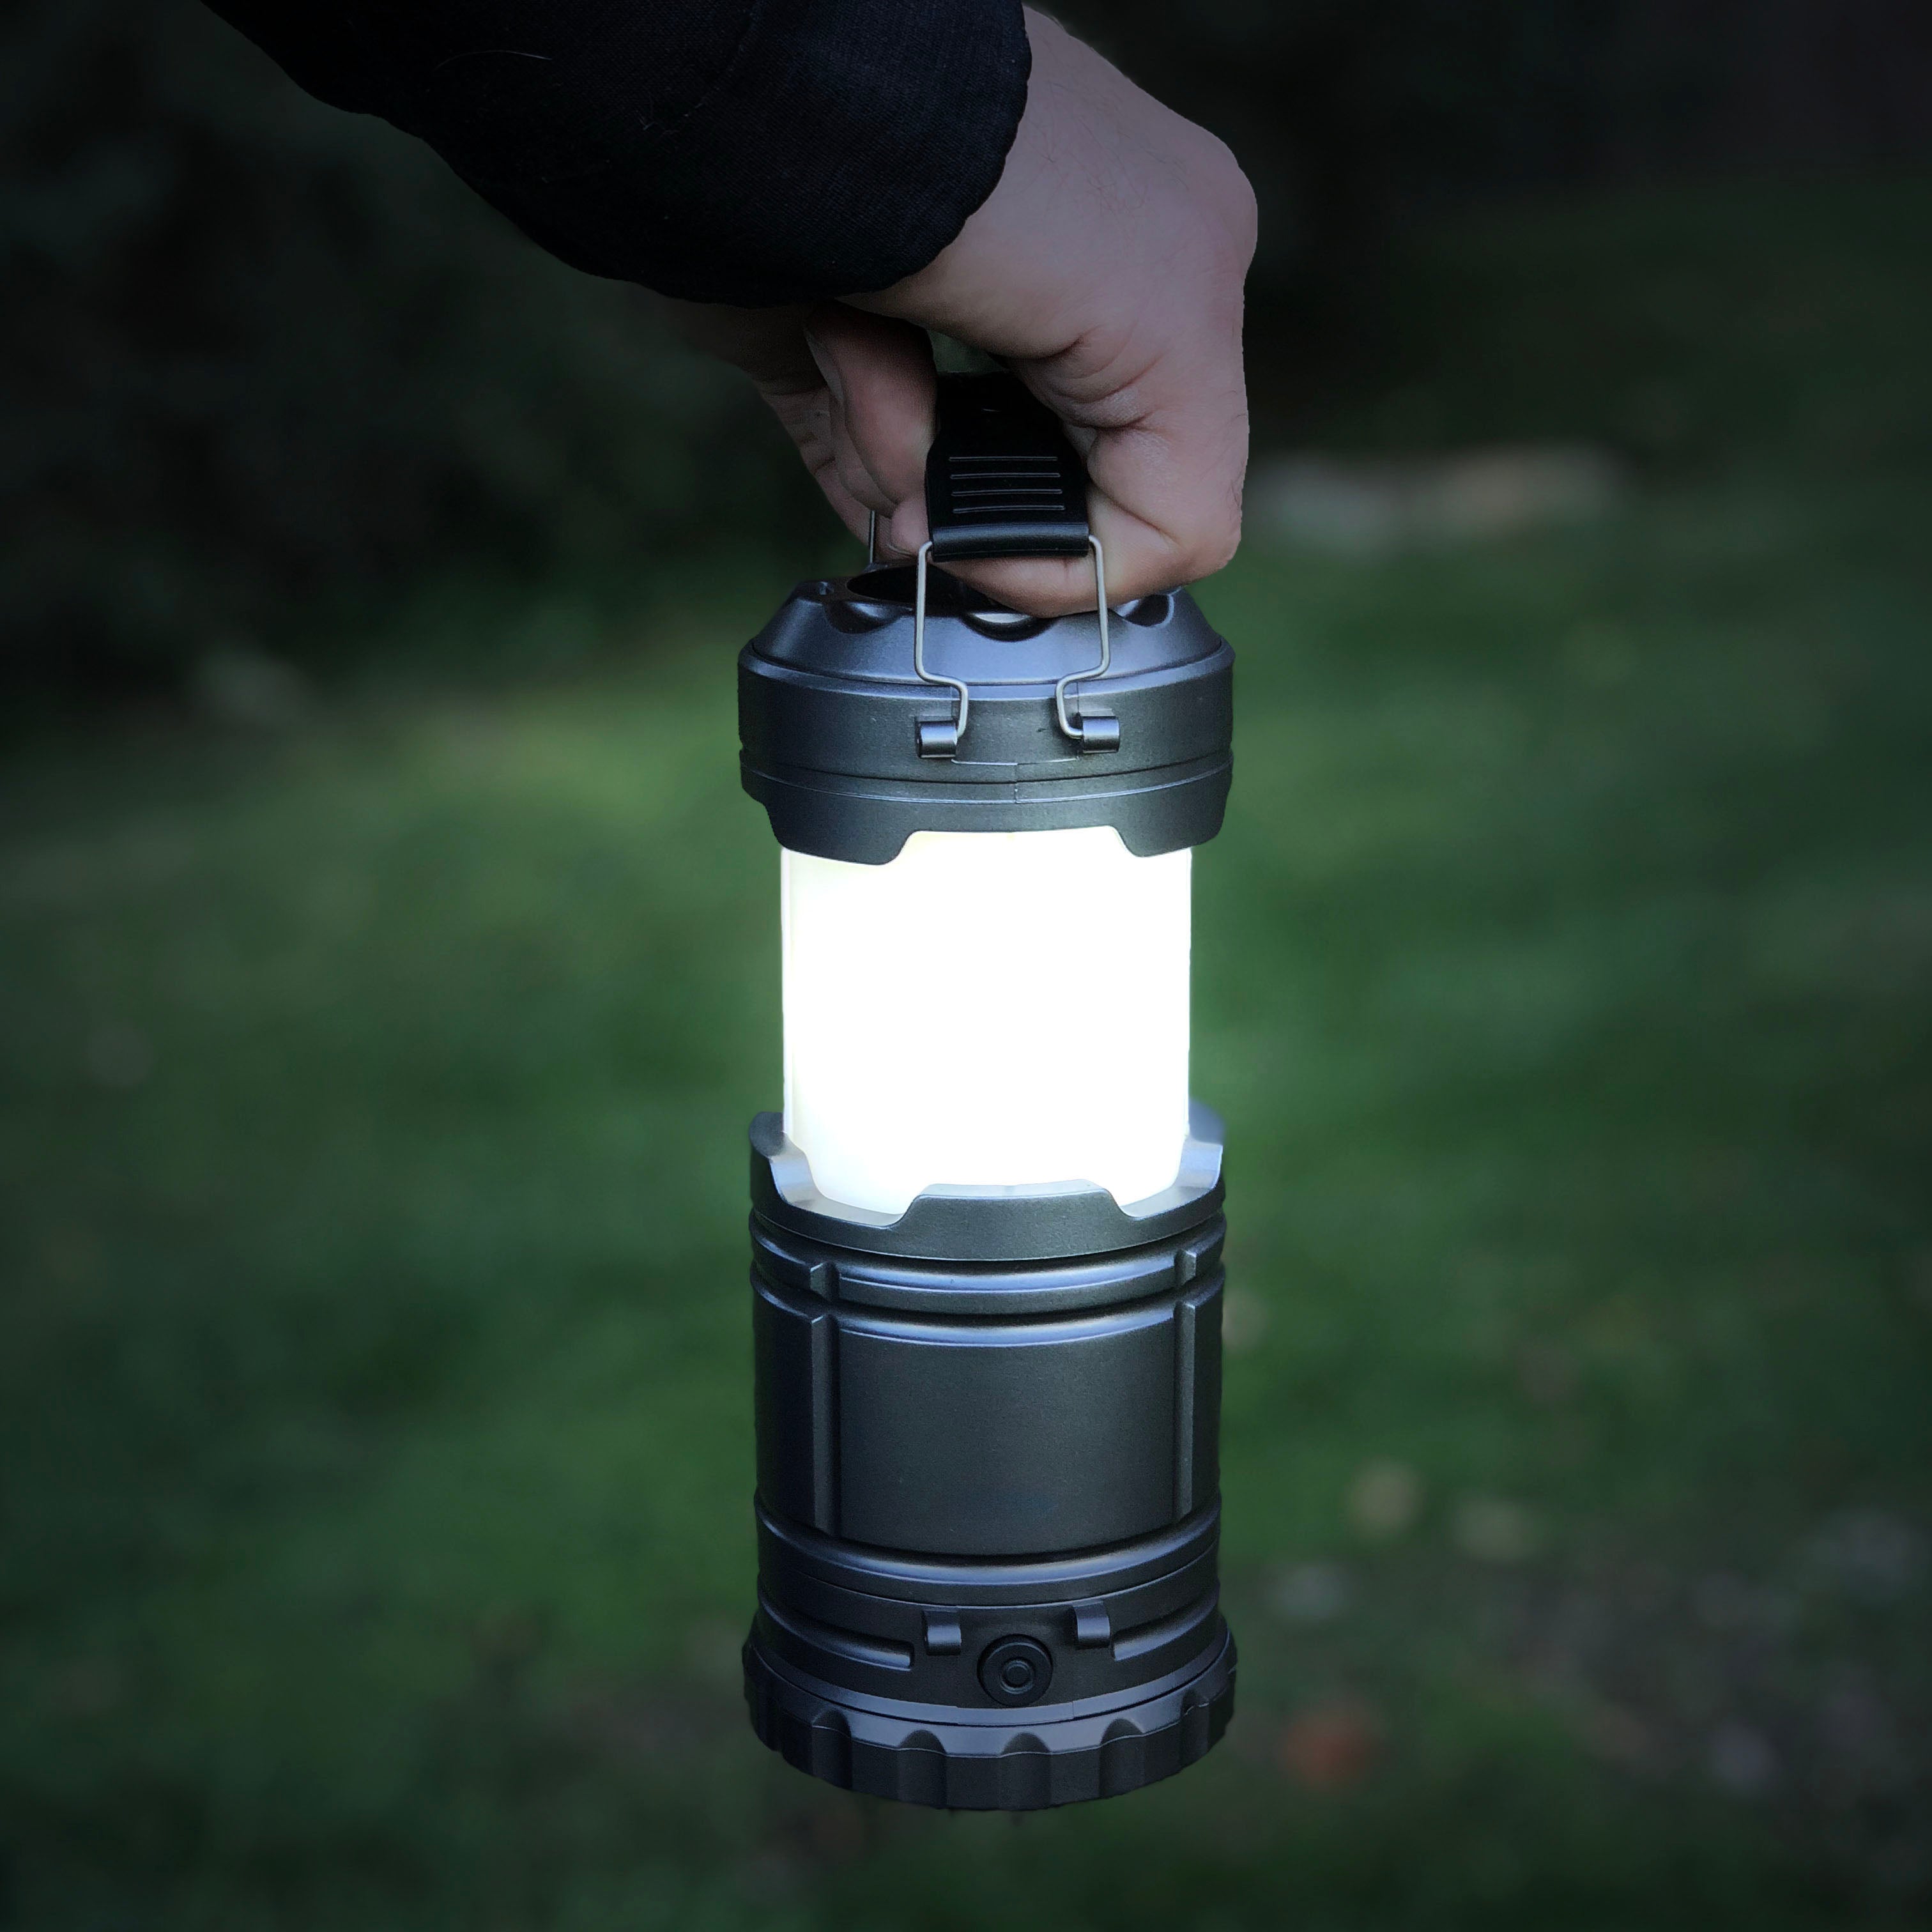 Sliding Lantern - 3 Lighting Modes